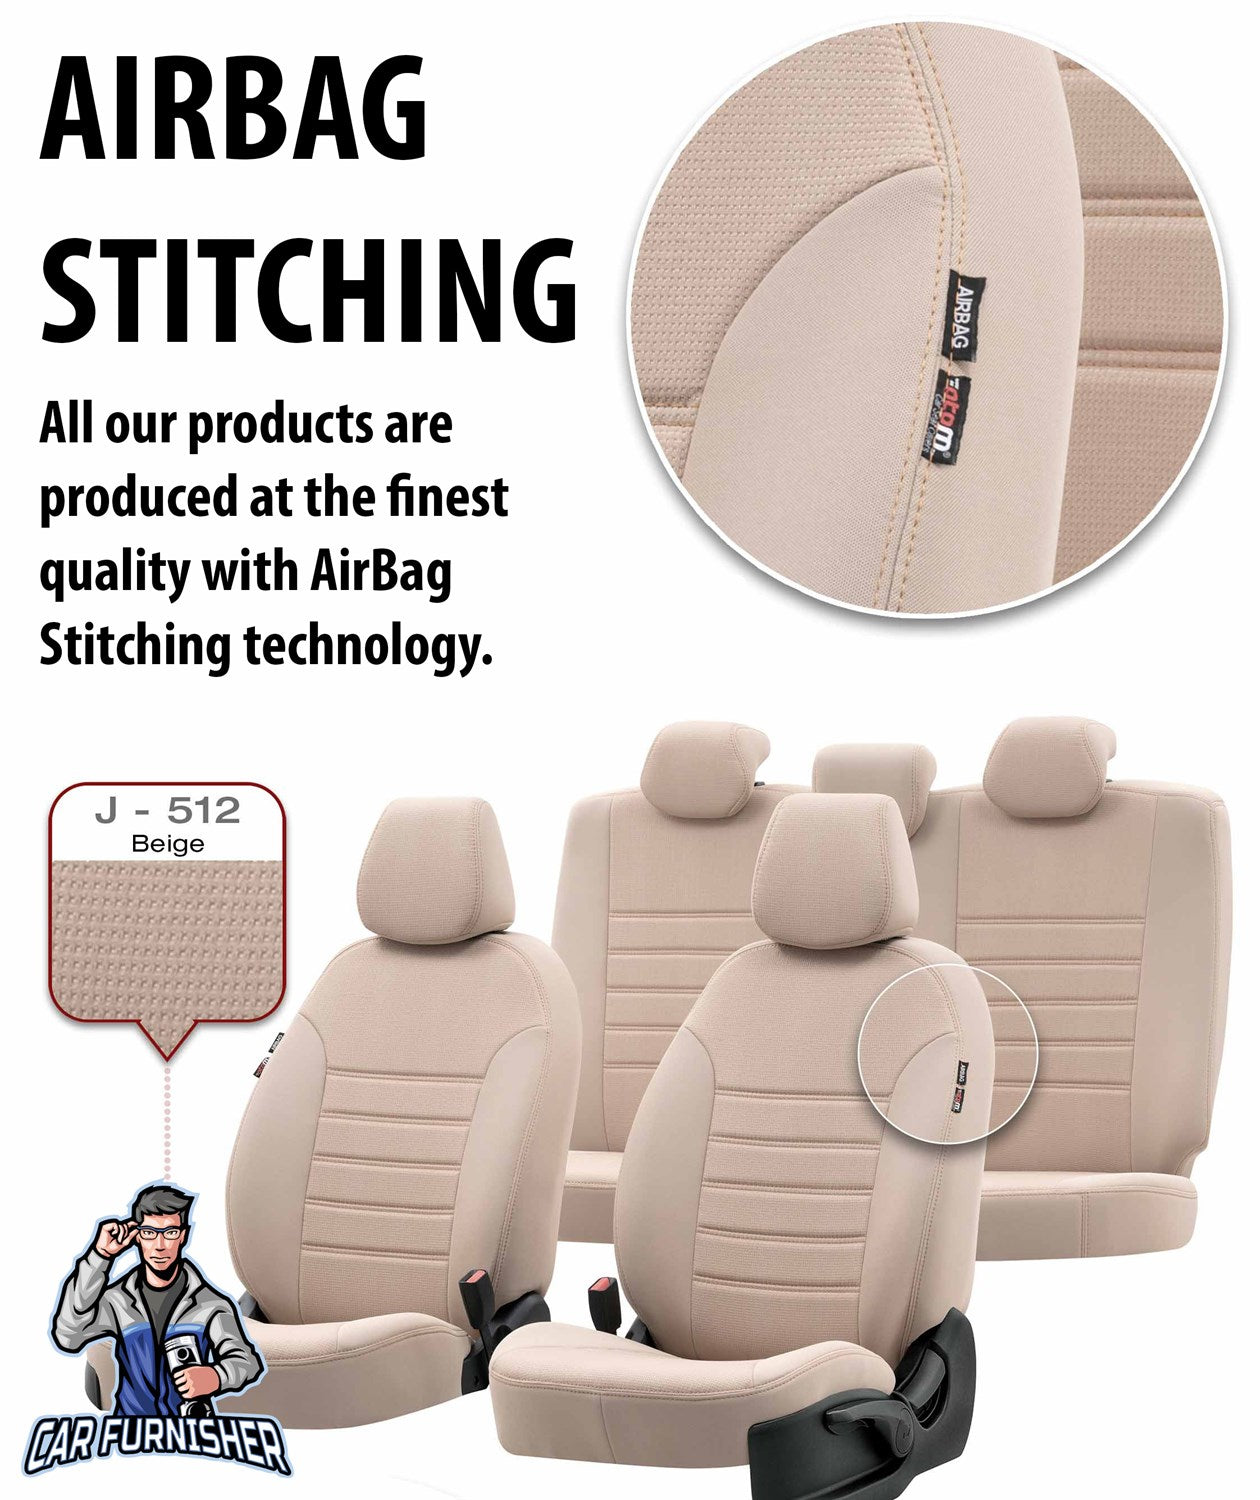 Mini Cooper Seat Covers Original Jacquard Design Smoked Jacquard Fabric